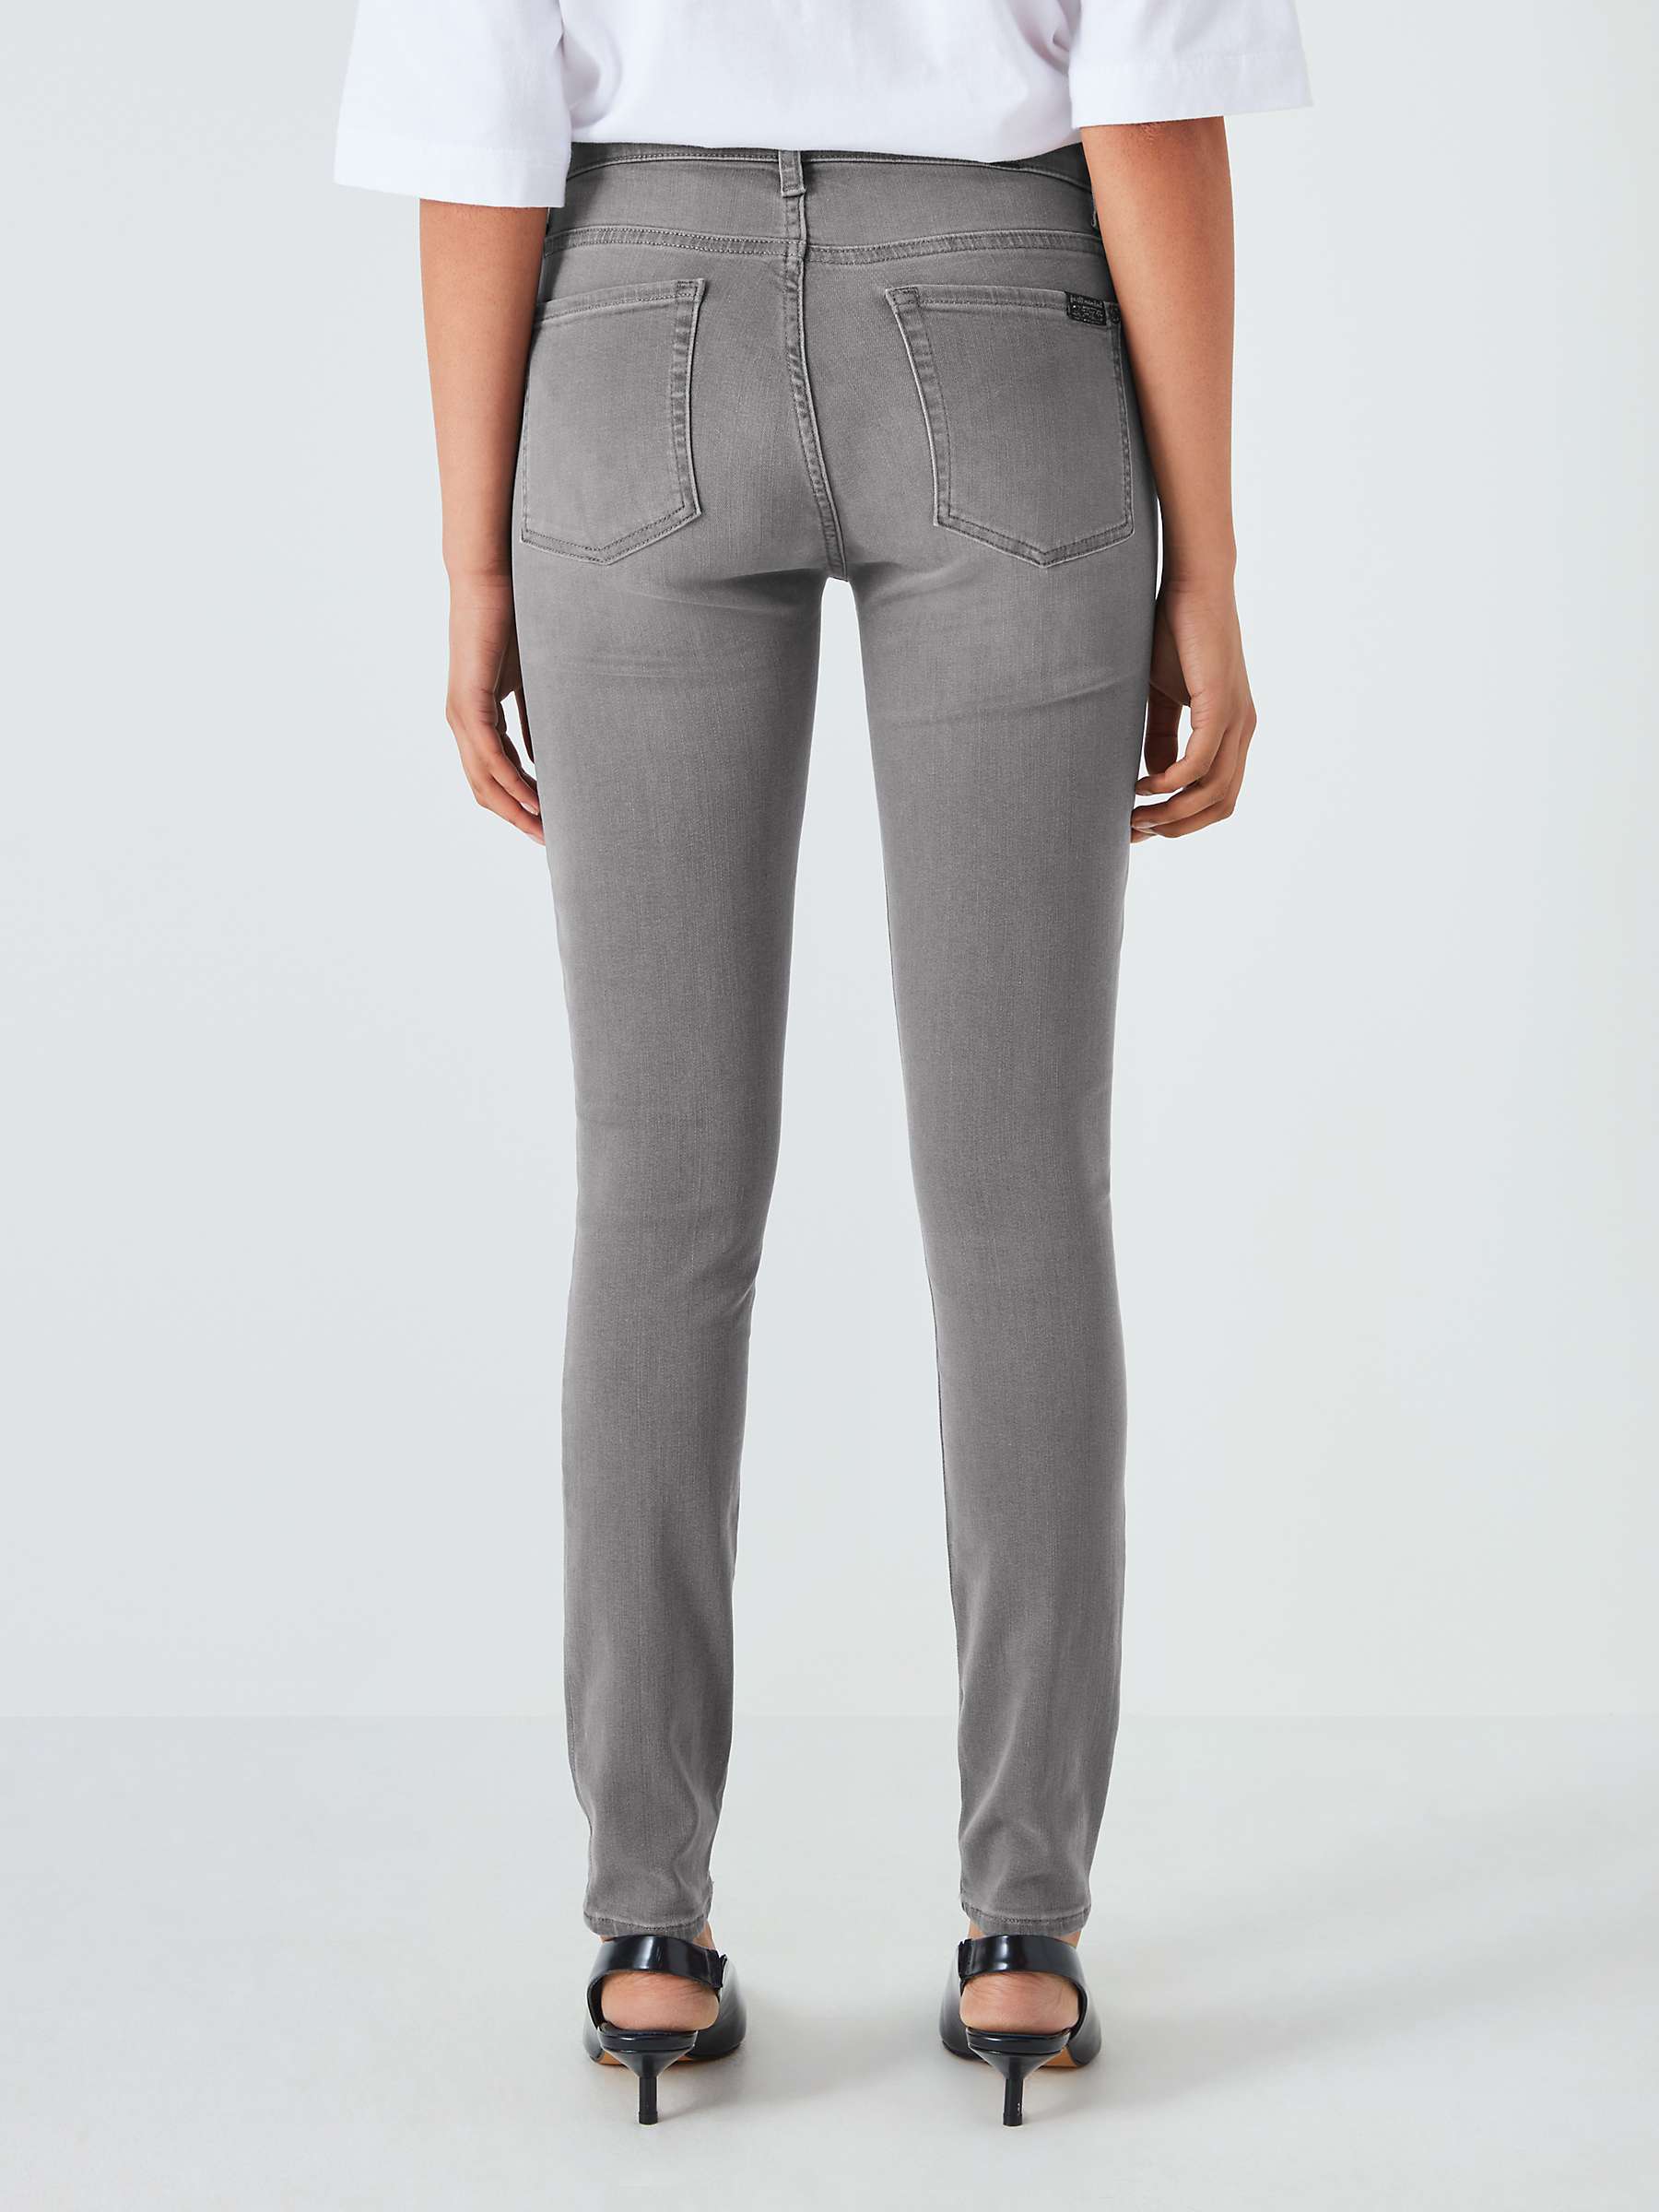 Buy 7 For All Mankind Skinny Slim Fit Jeans, Grey Online at johnlewis.com